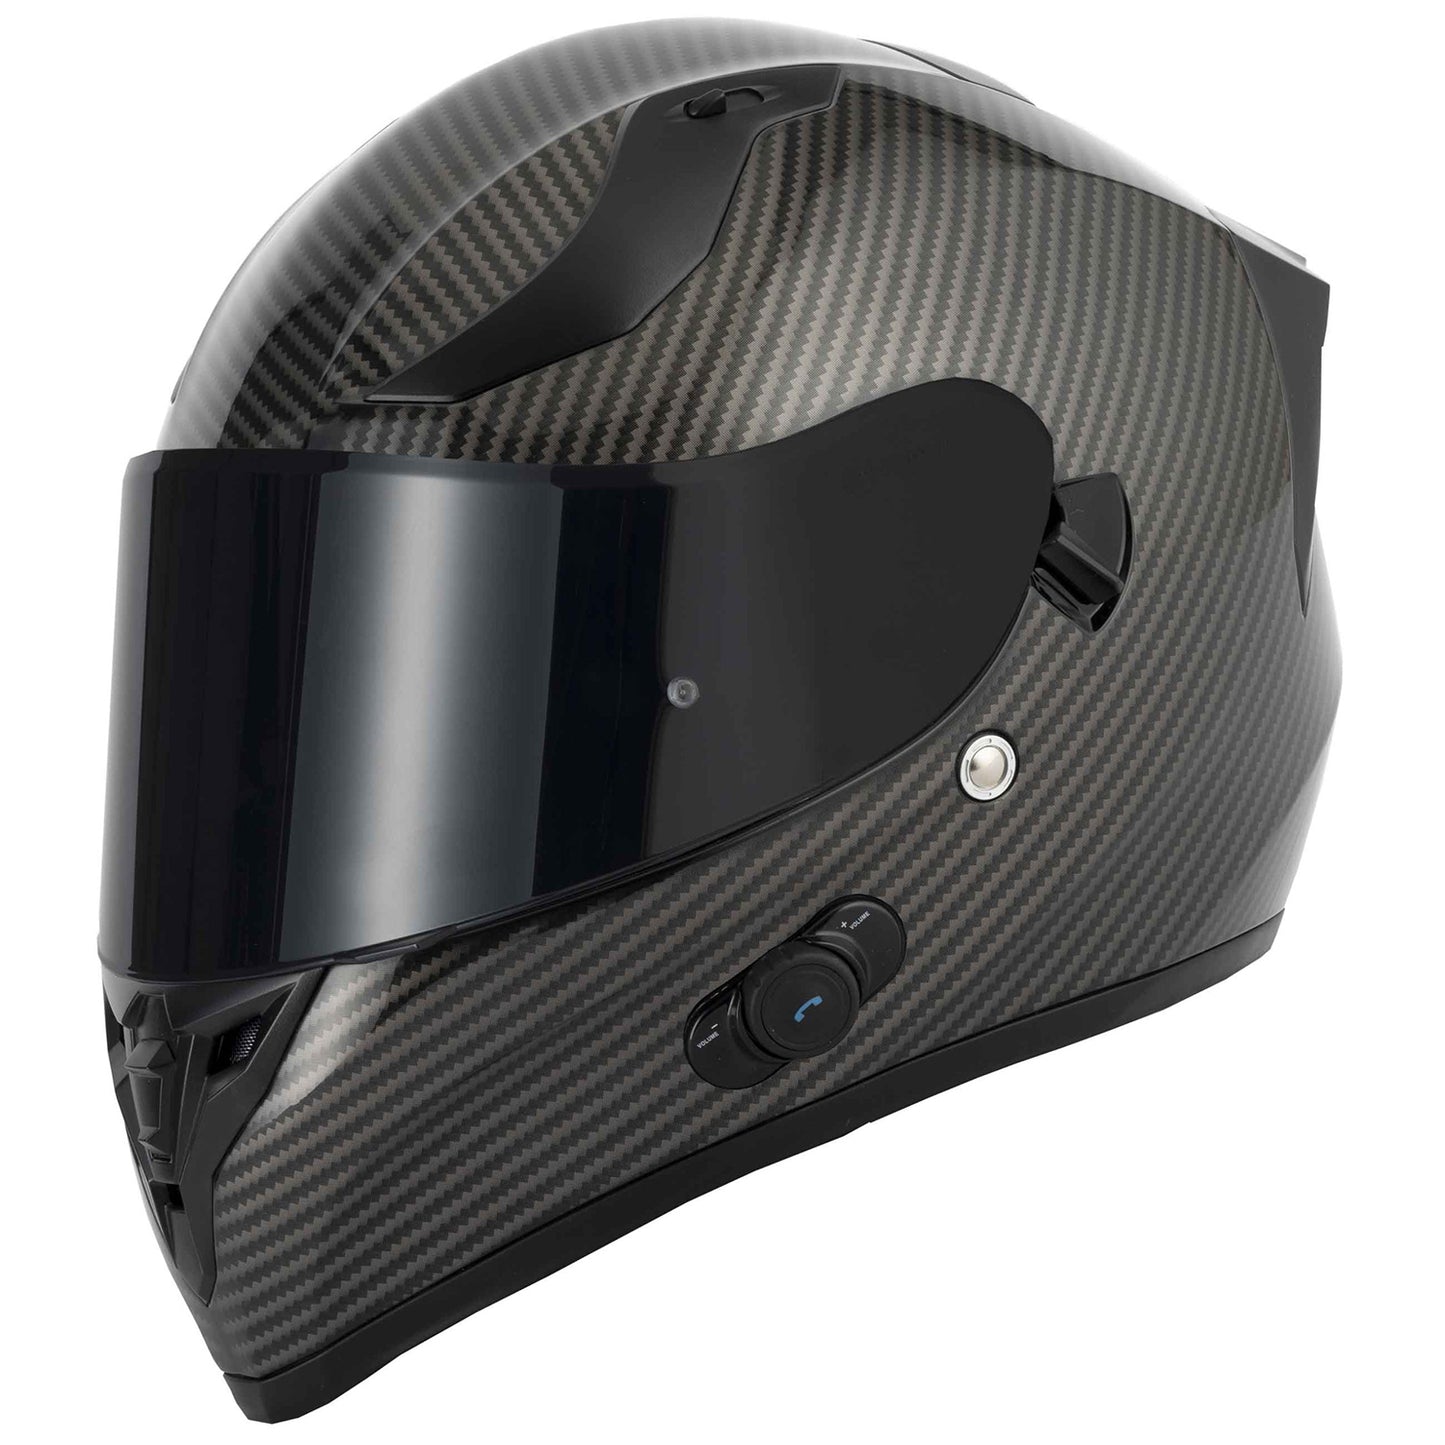 VCAN H128 VENOM Blinc Bluetooth Helmet